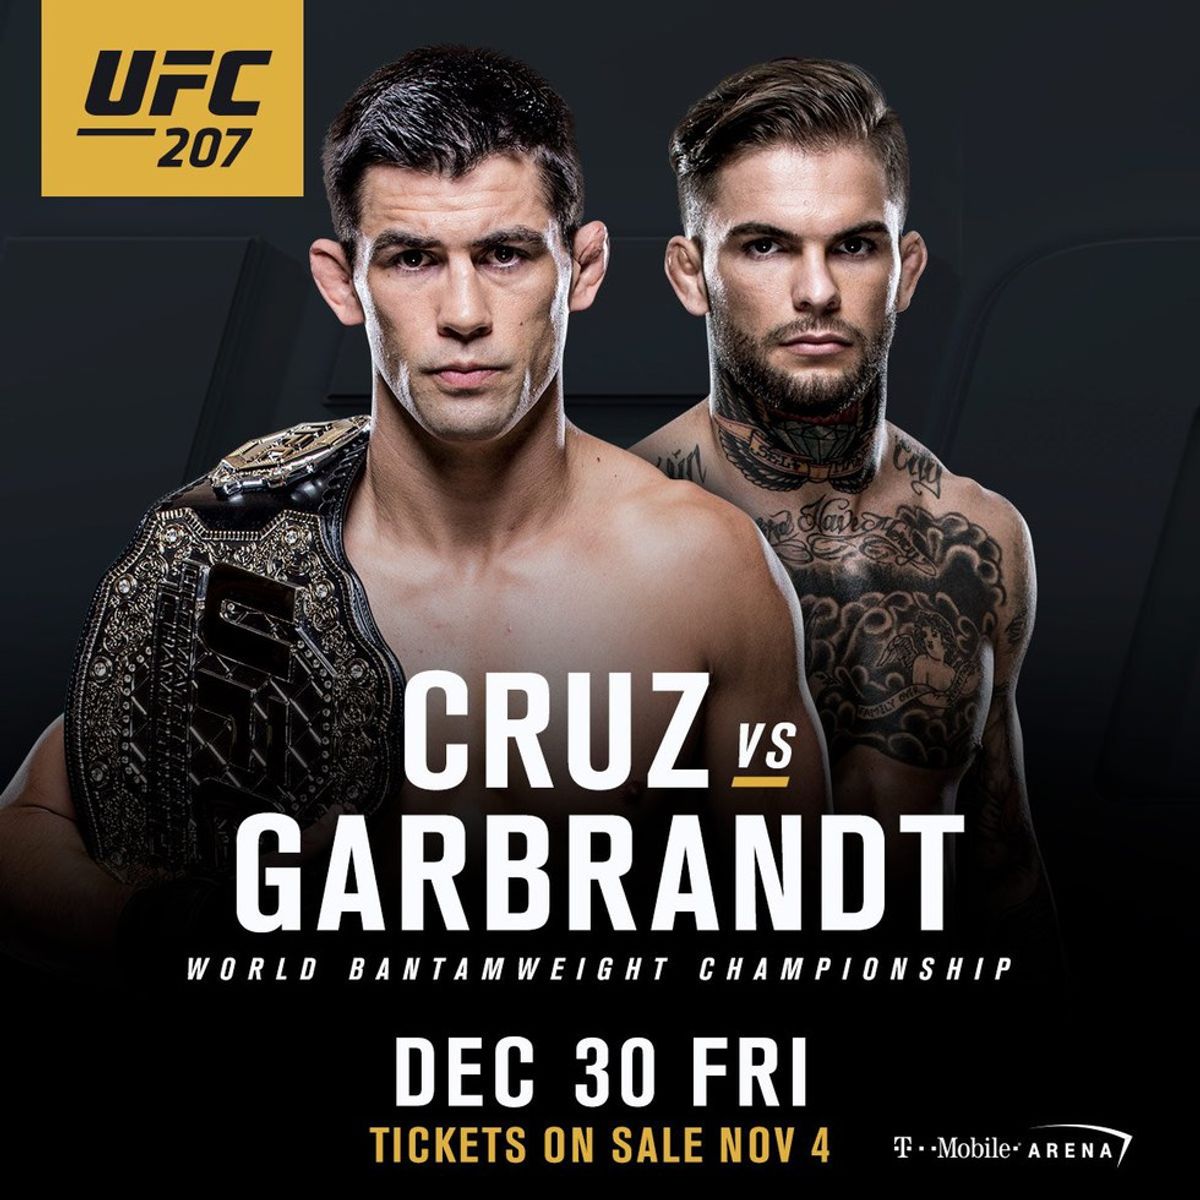 UFC 207 Co-Main Event - Cruz vs Garbrandt